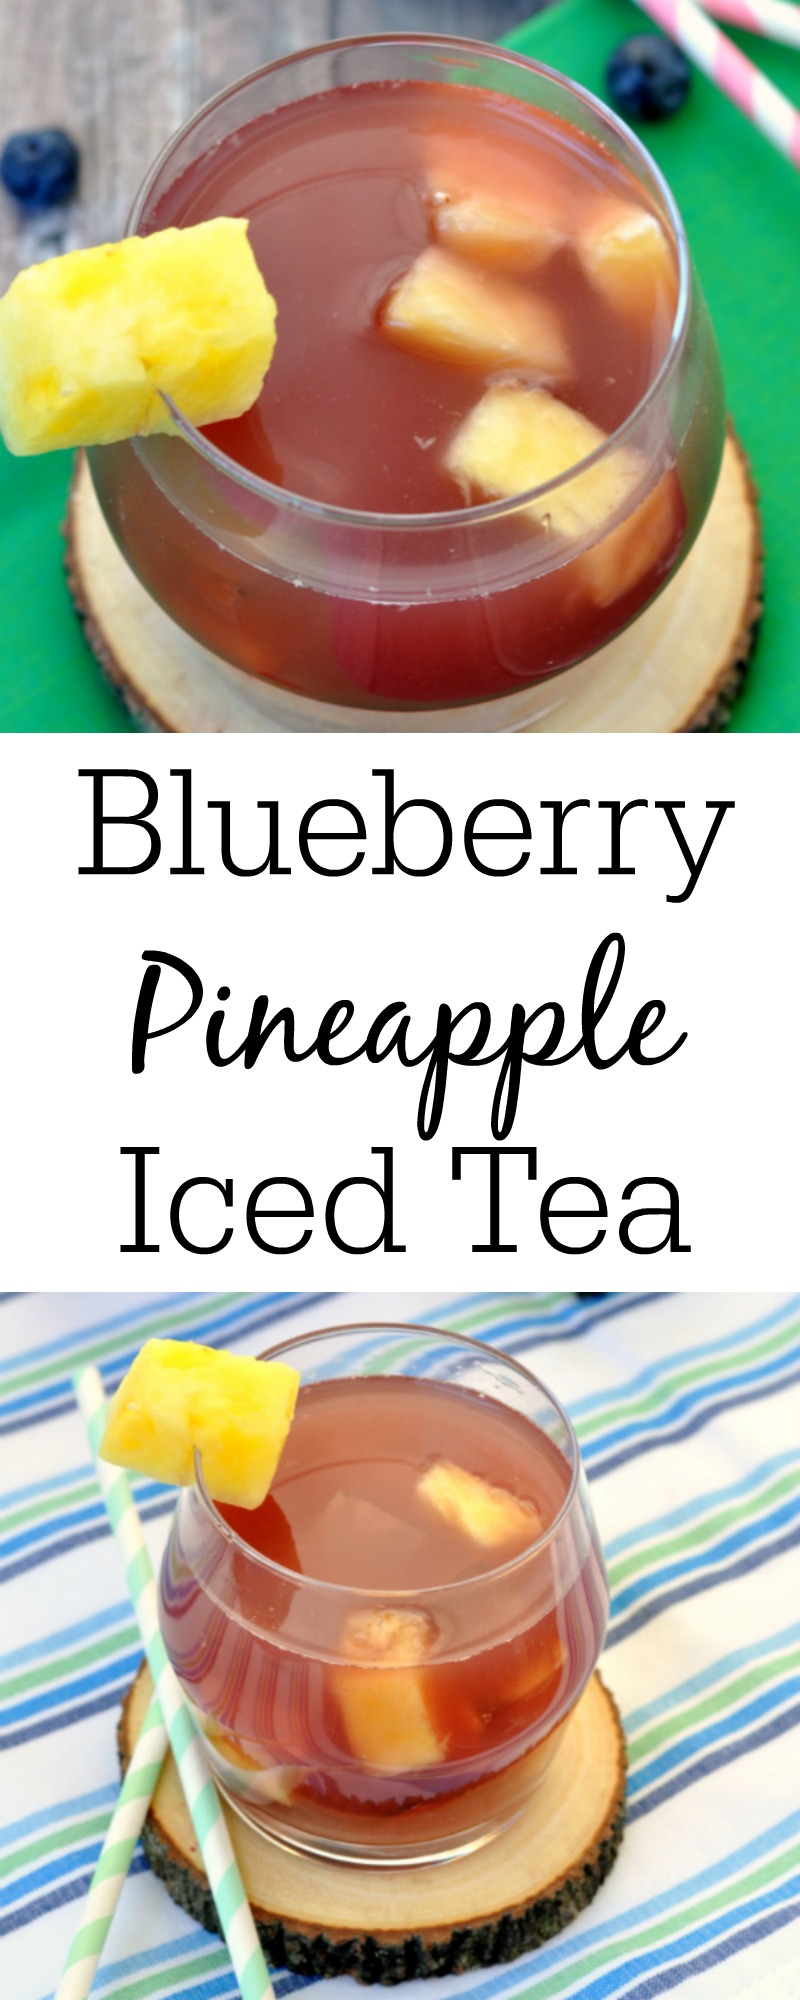 Blueberry Pineapple Iced Tea